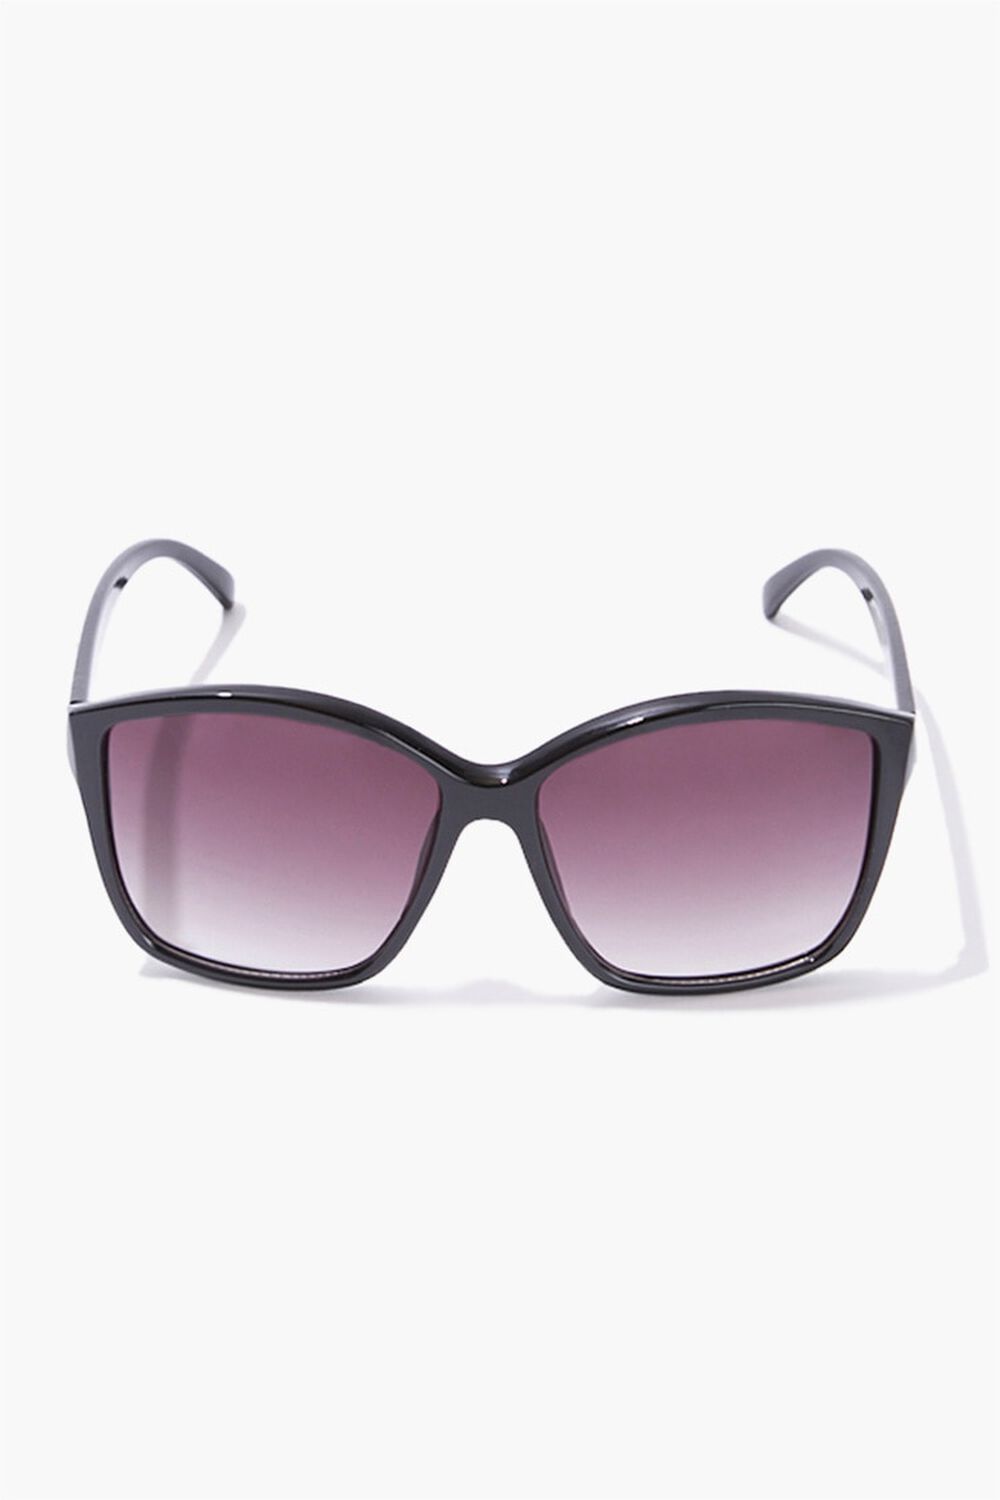 BLACK/GREY Square Frame Sunglasses, image 1